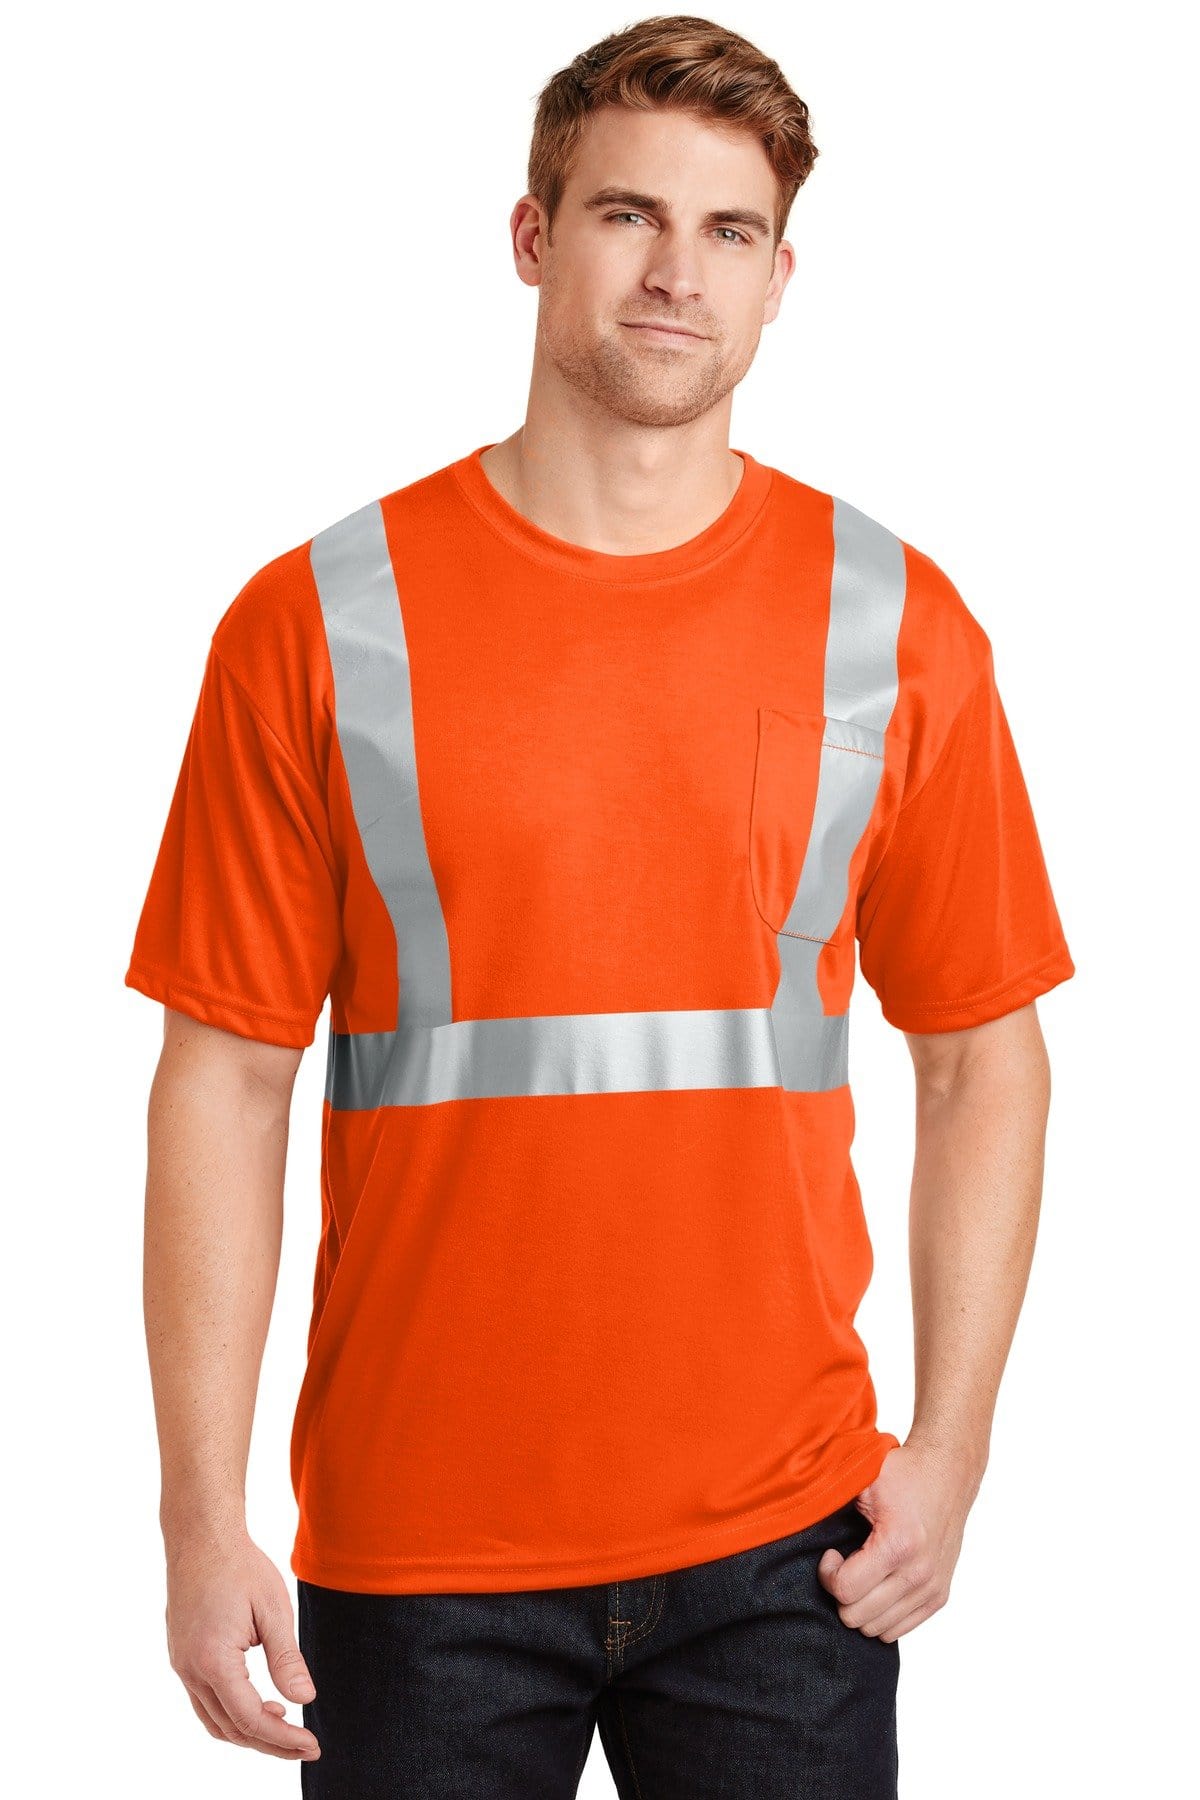 CornerStone Workwear CornerStone ANSI 107 Class 2 Safety T-Shirt.  CS401